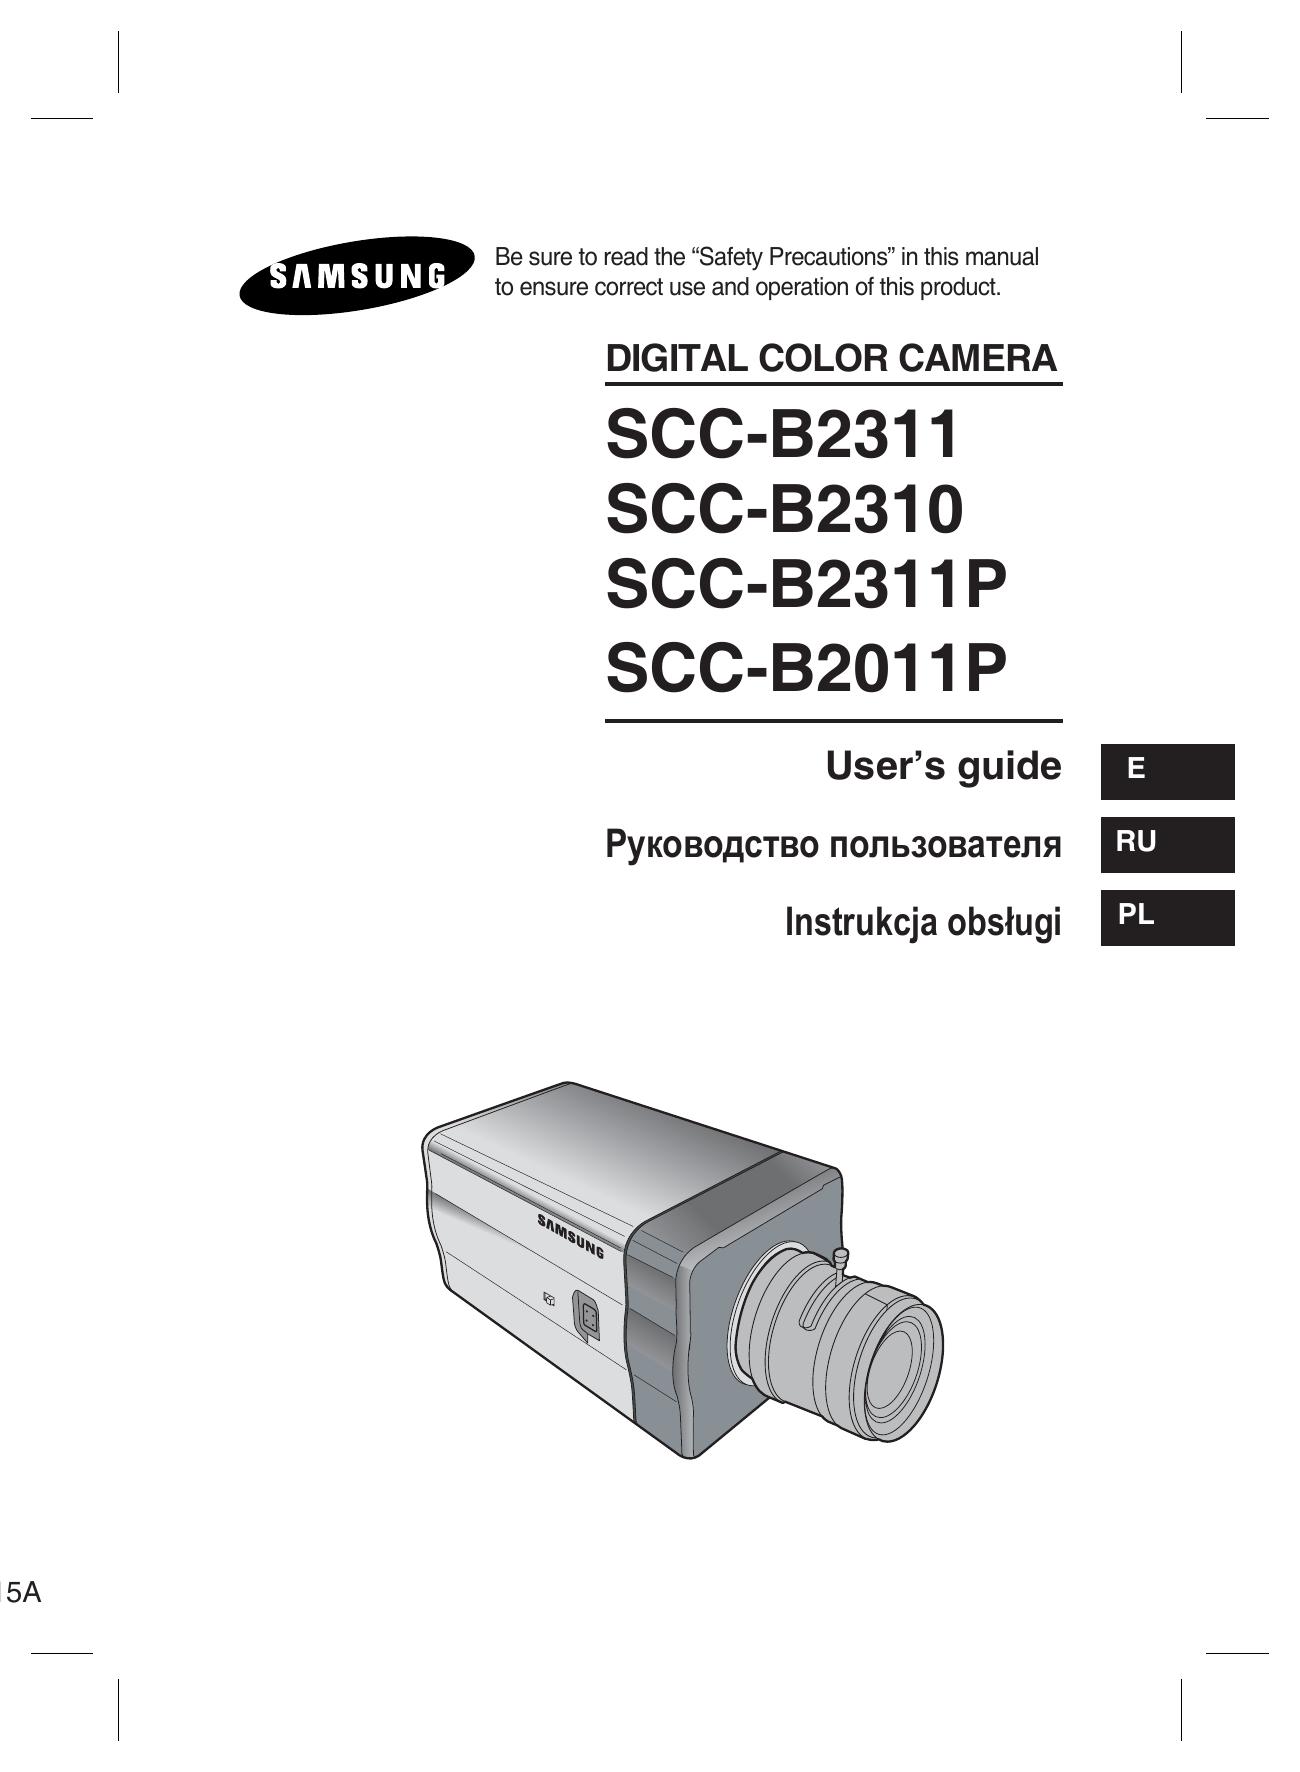 Samsung SCC-B2310 Security Camera User Manual